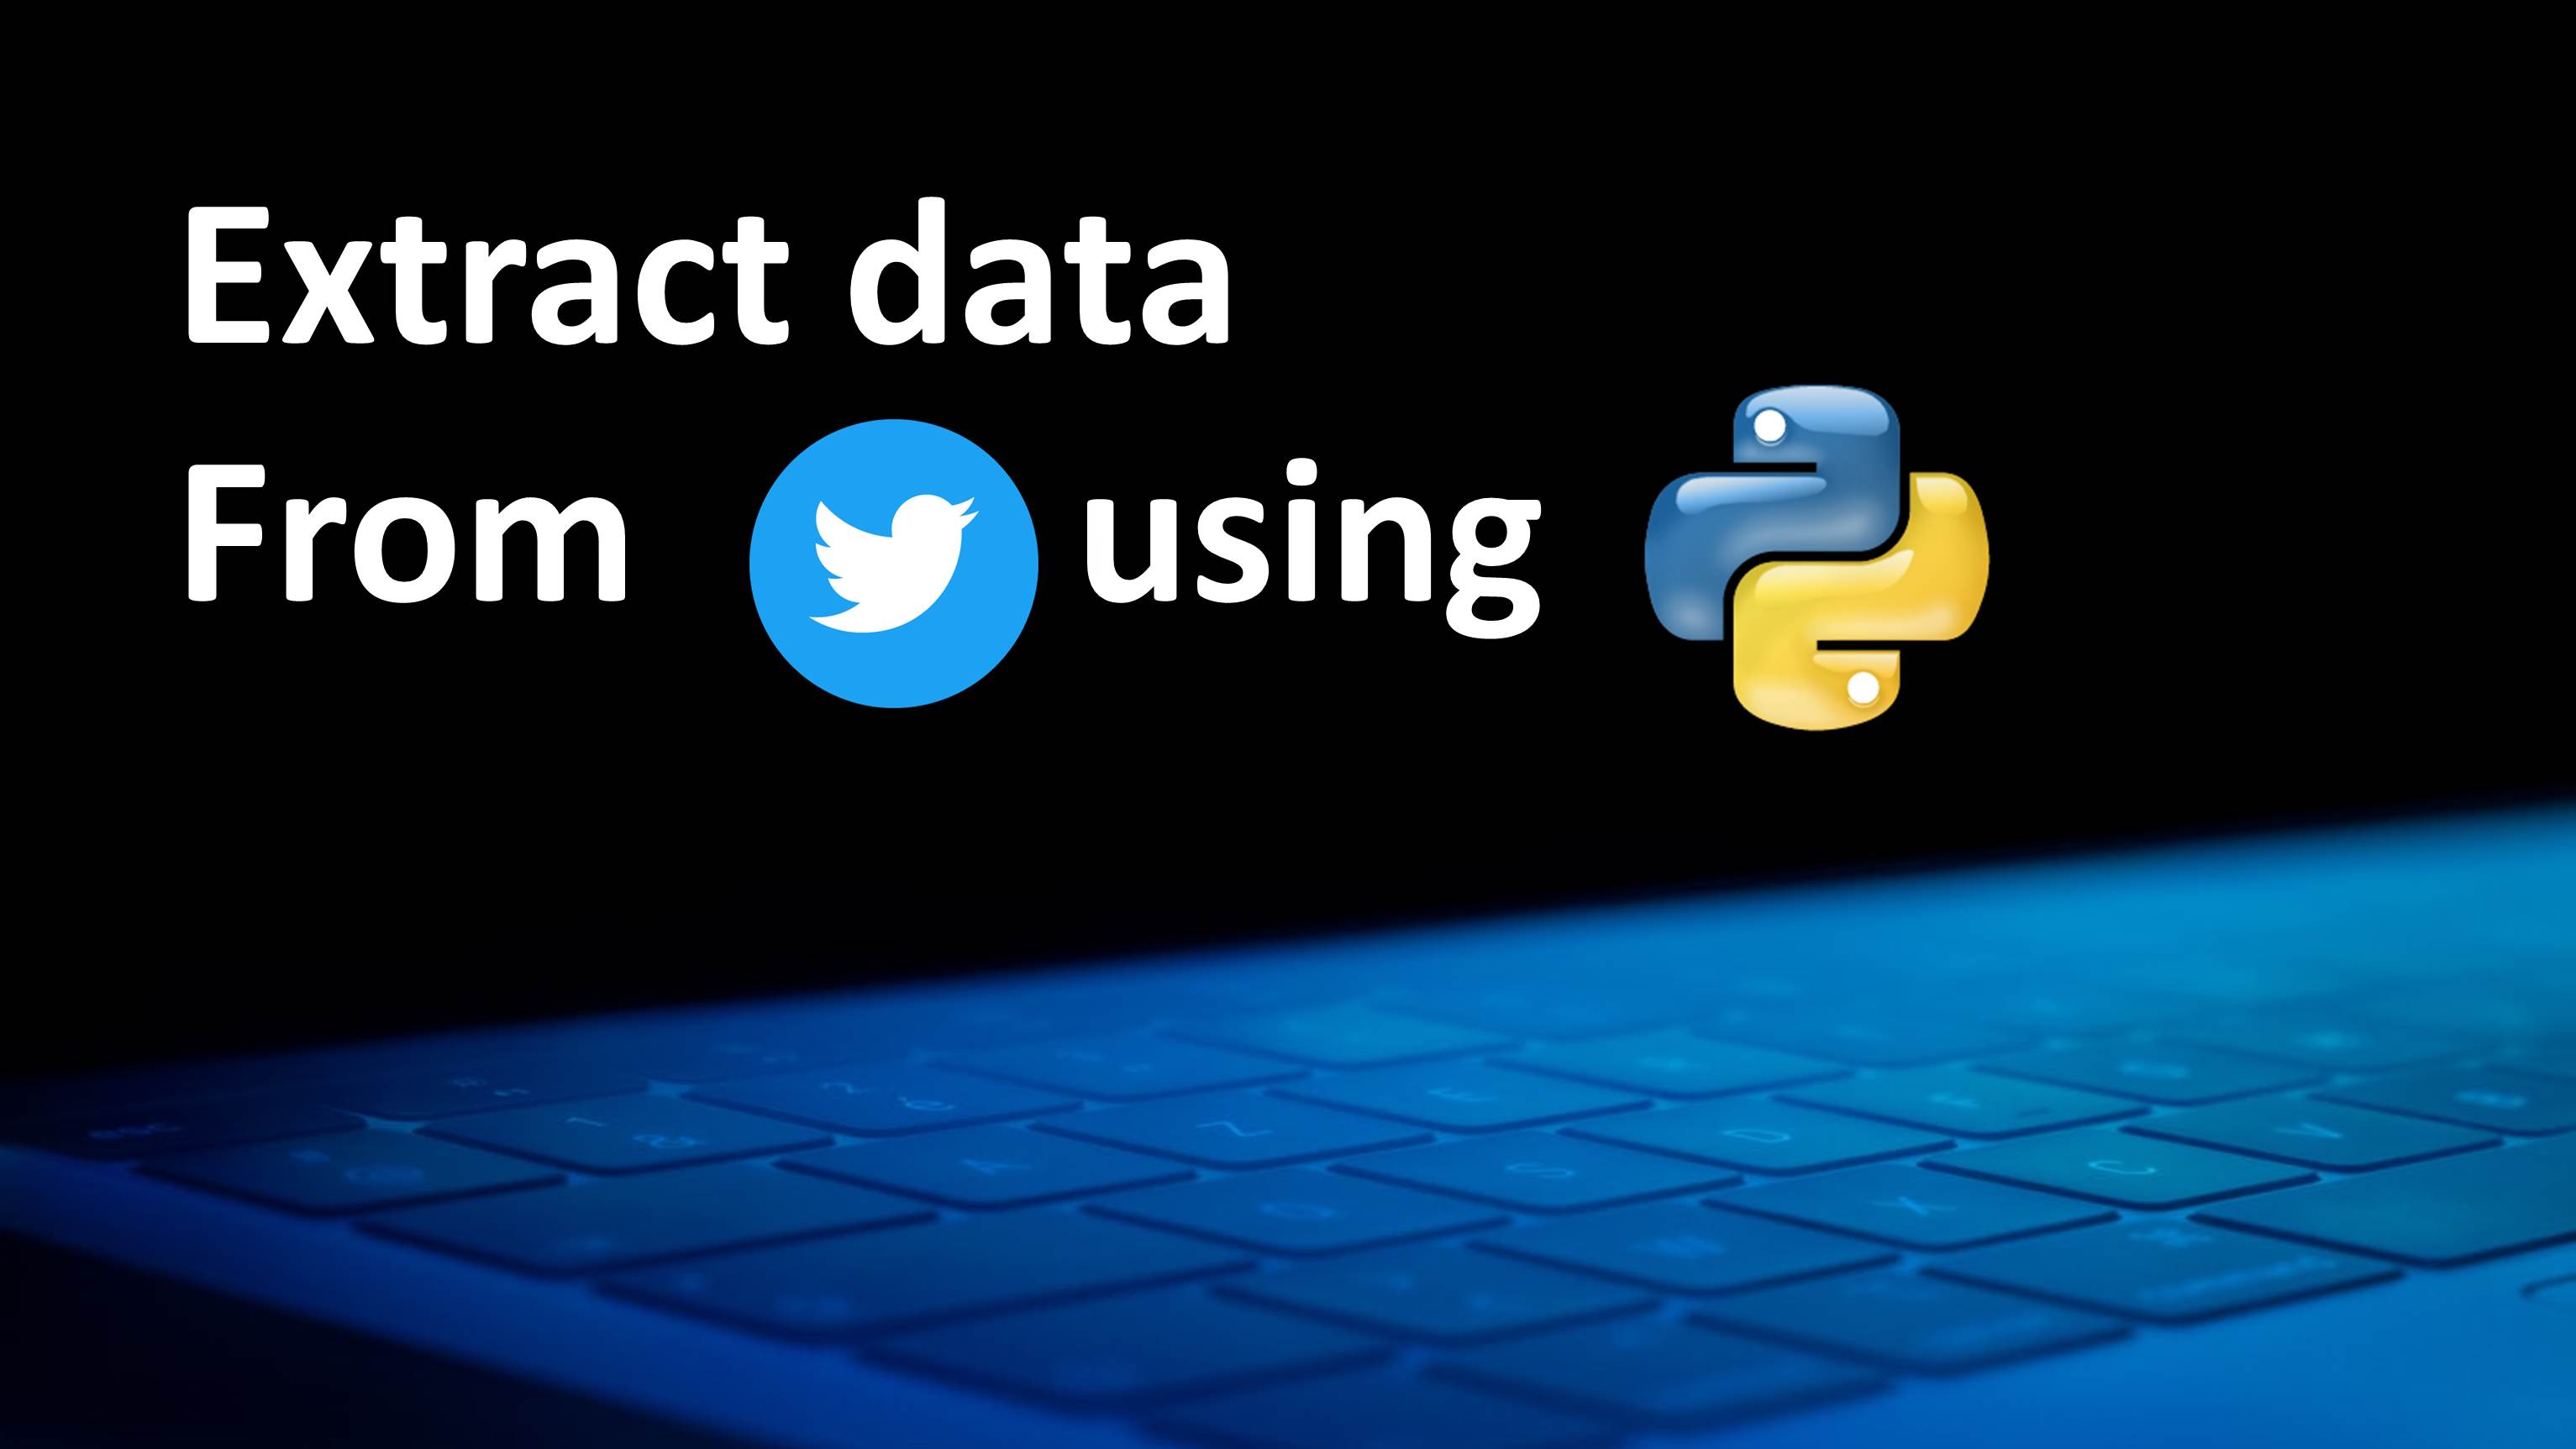 Extract data using Twitter API and python